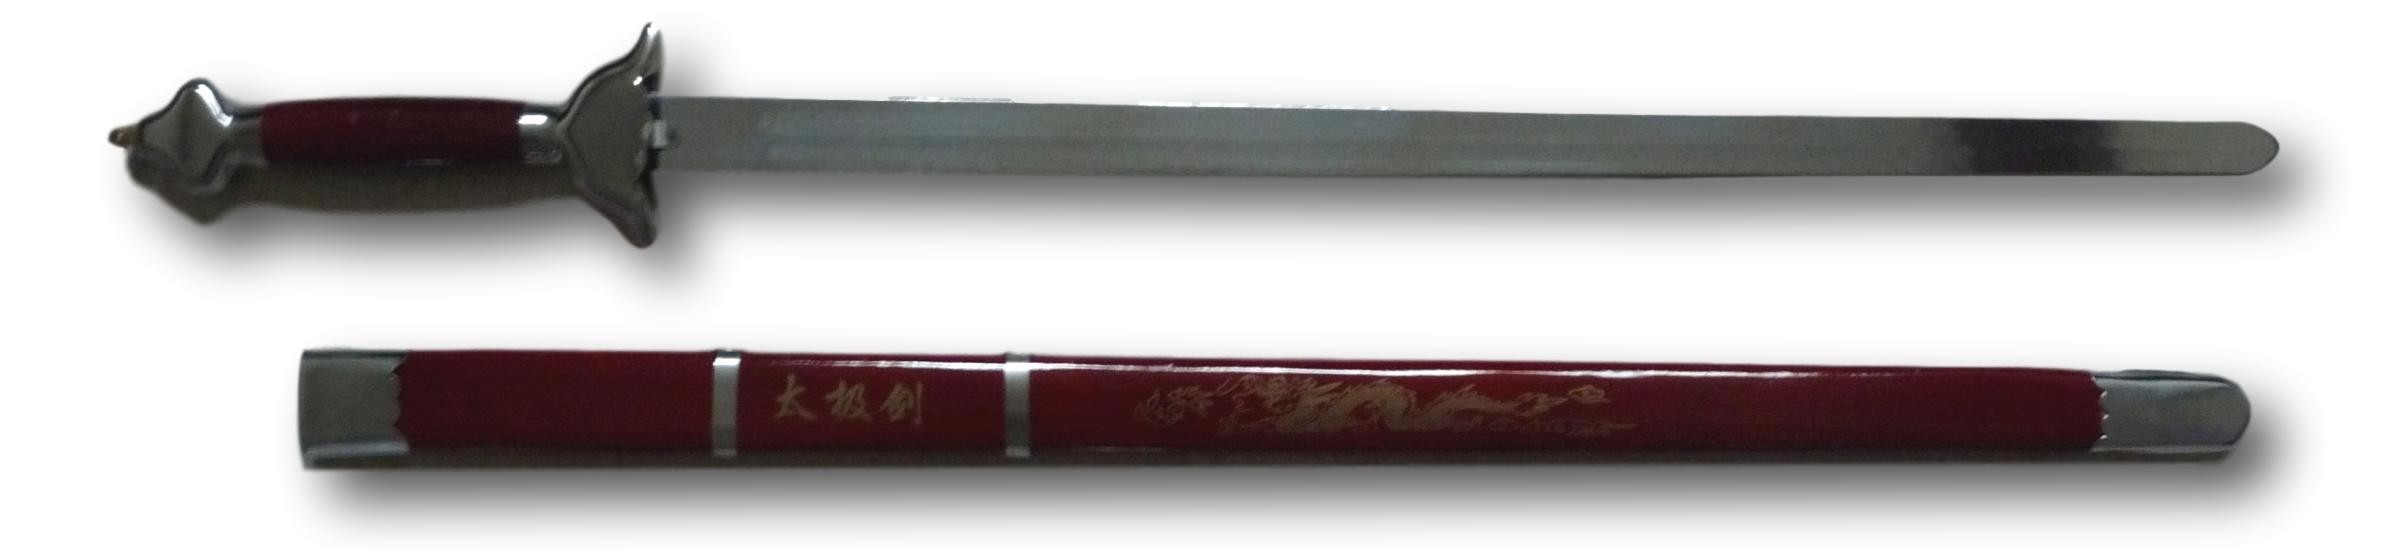 Épée taichi en métal semi rigide et son fourreau